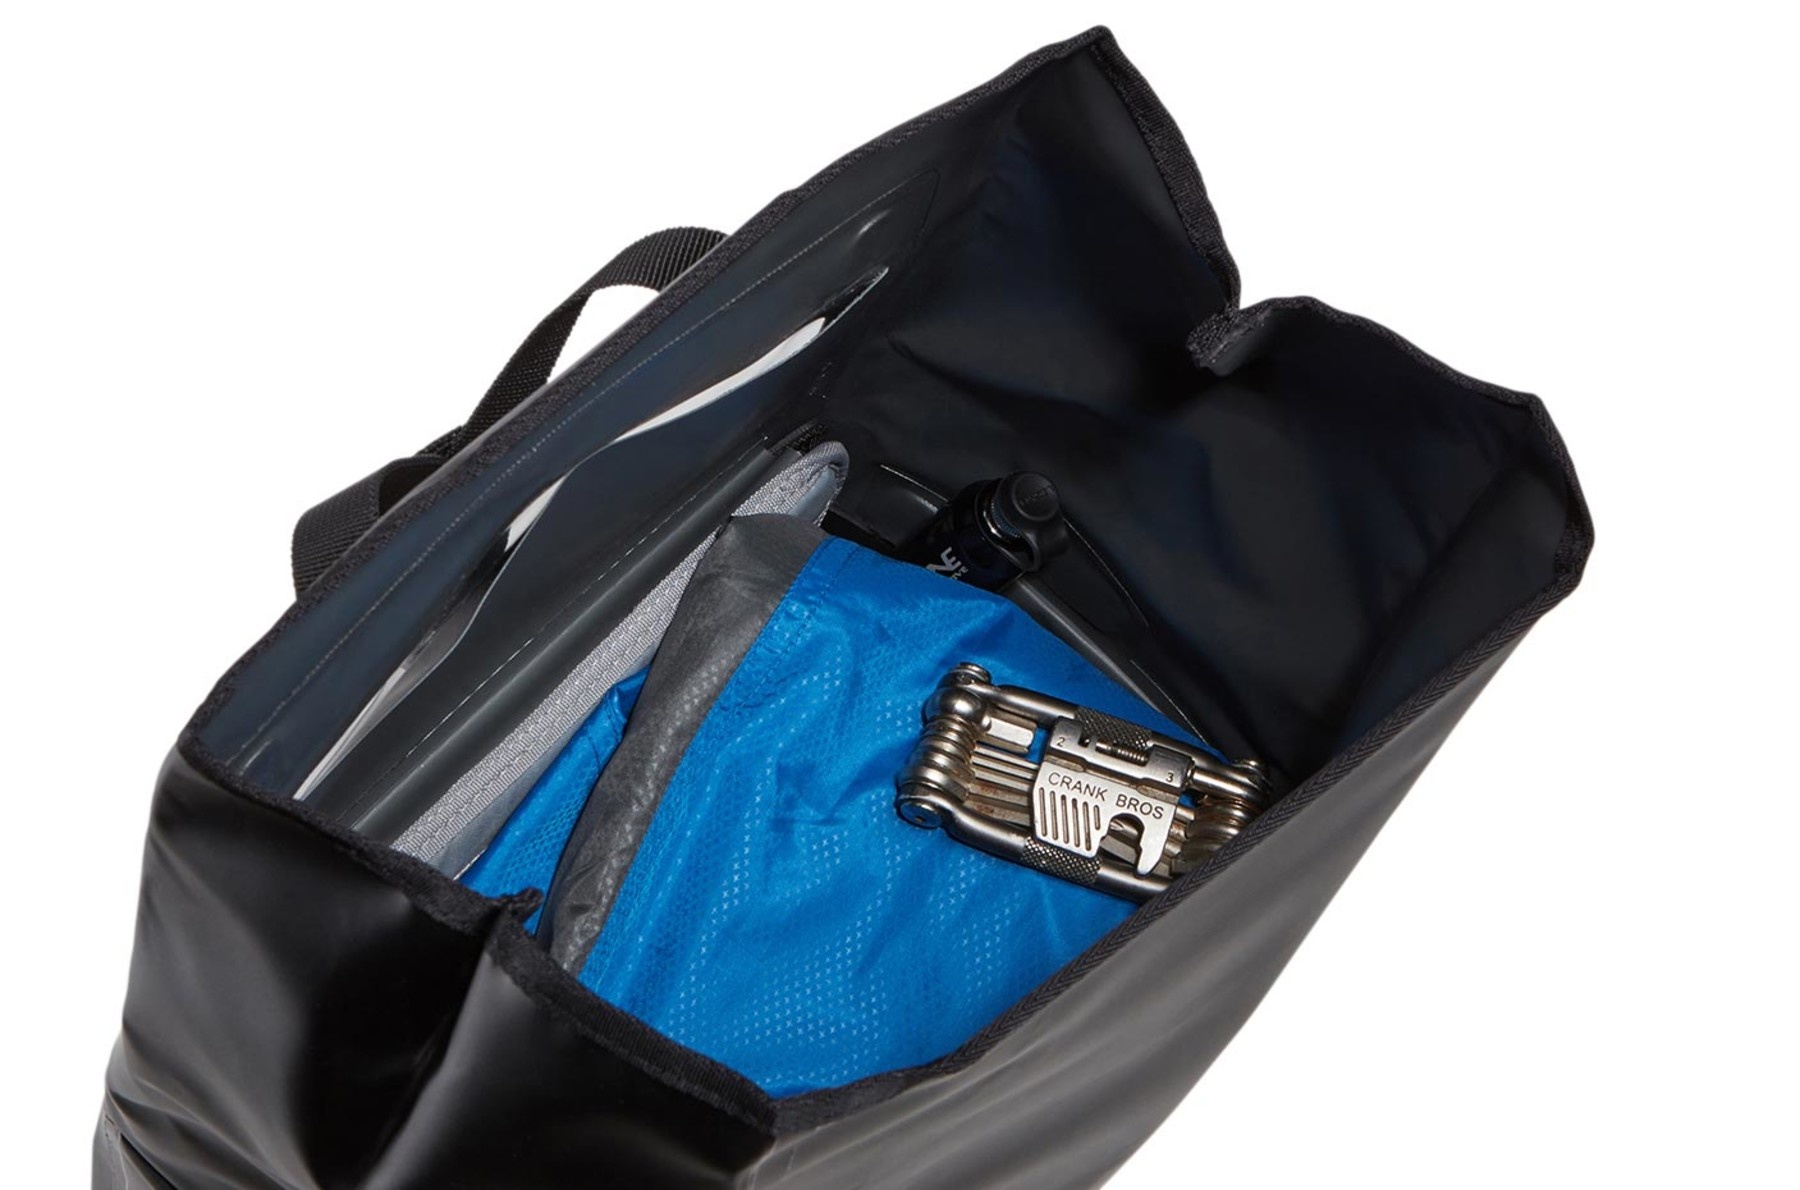 Shield Handlebar Bag with Mount - Black